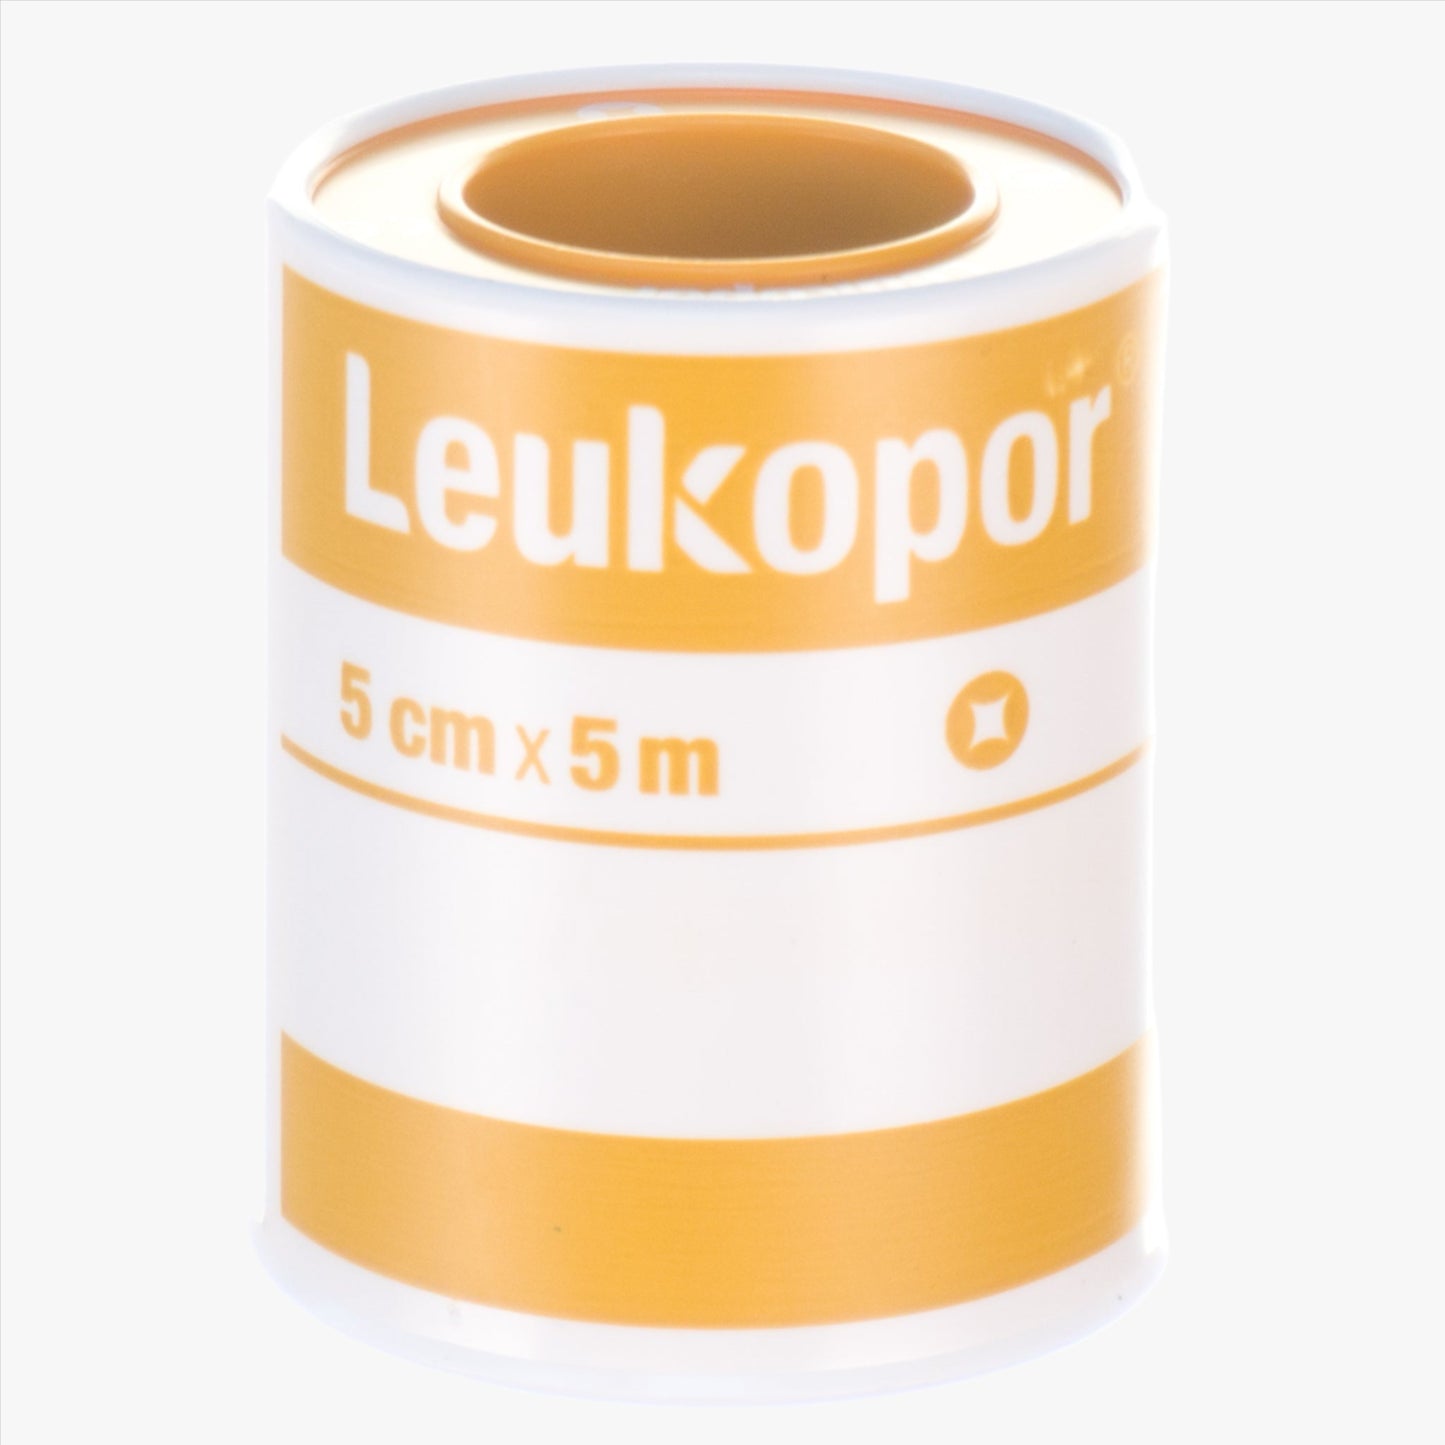 Leukopor Surgical tape 5 cm x 5 m